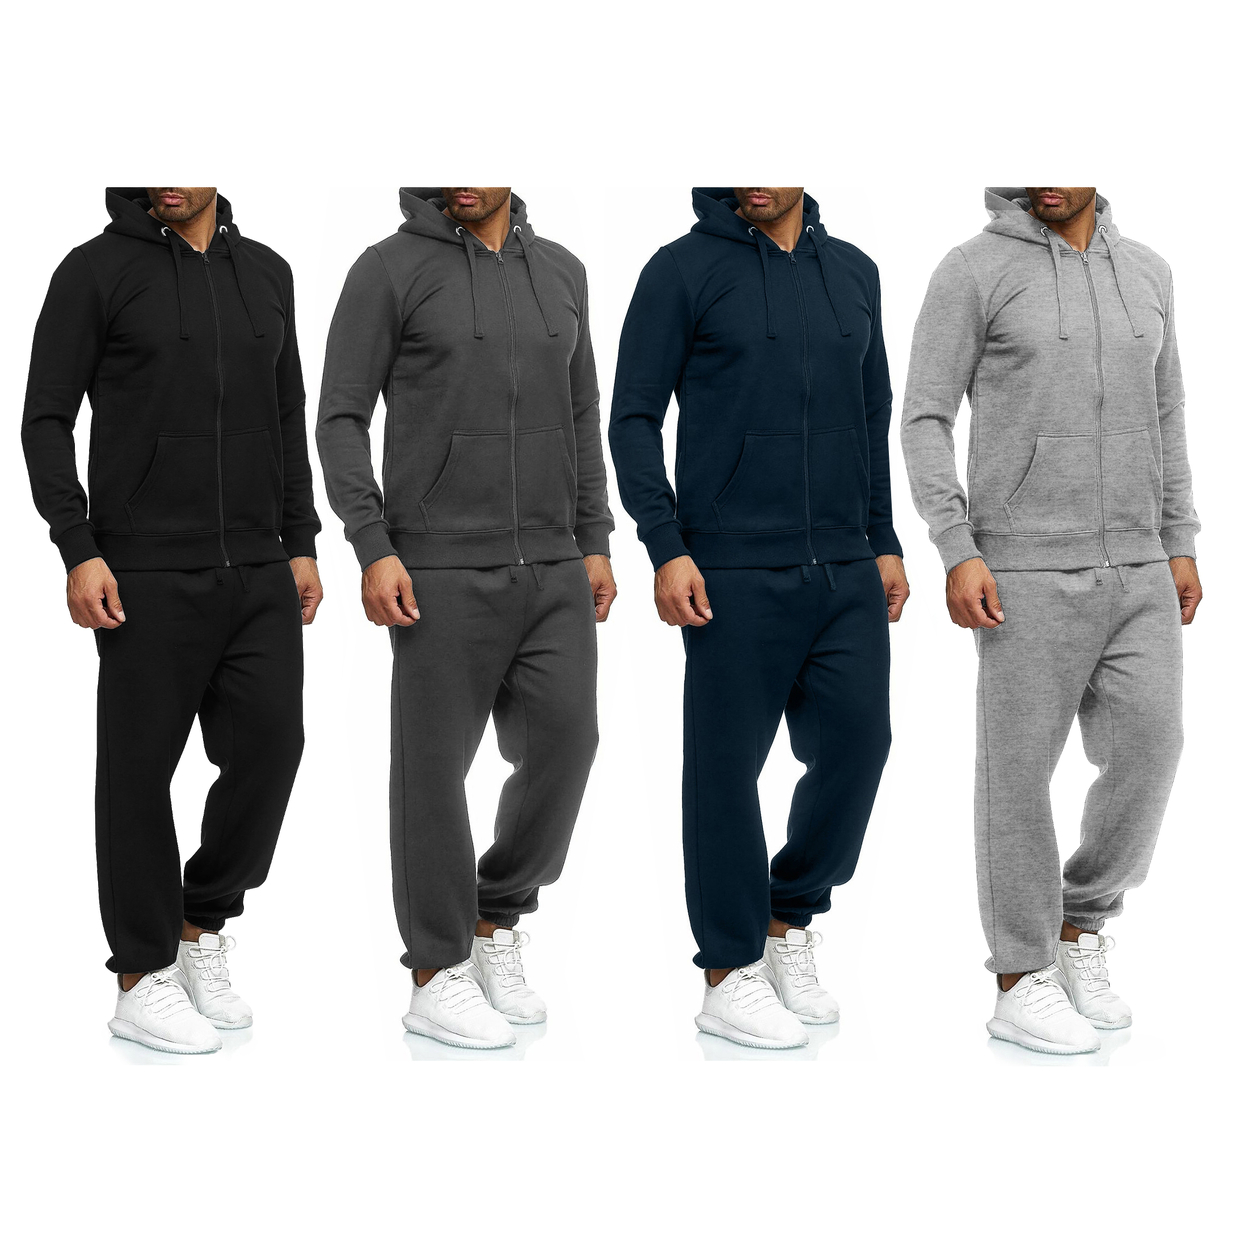 2/4-Piece: Men's Winter Warm Cozy Athletic Multi-Pockets BIG & TALL Sweatsuit Set - Grey, 2, Small